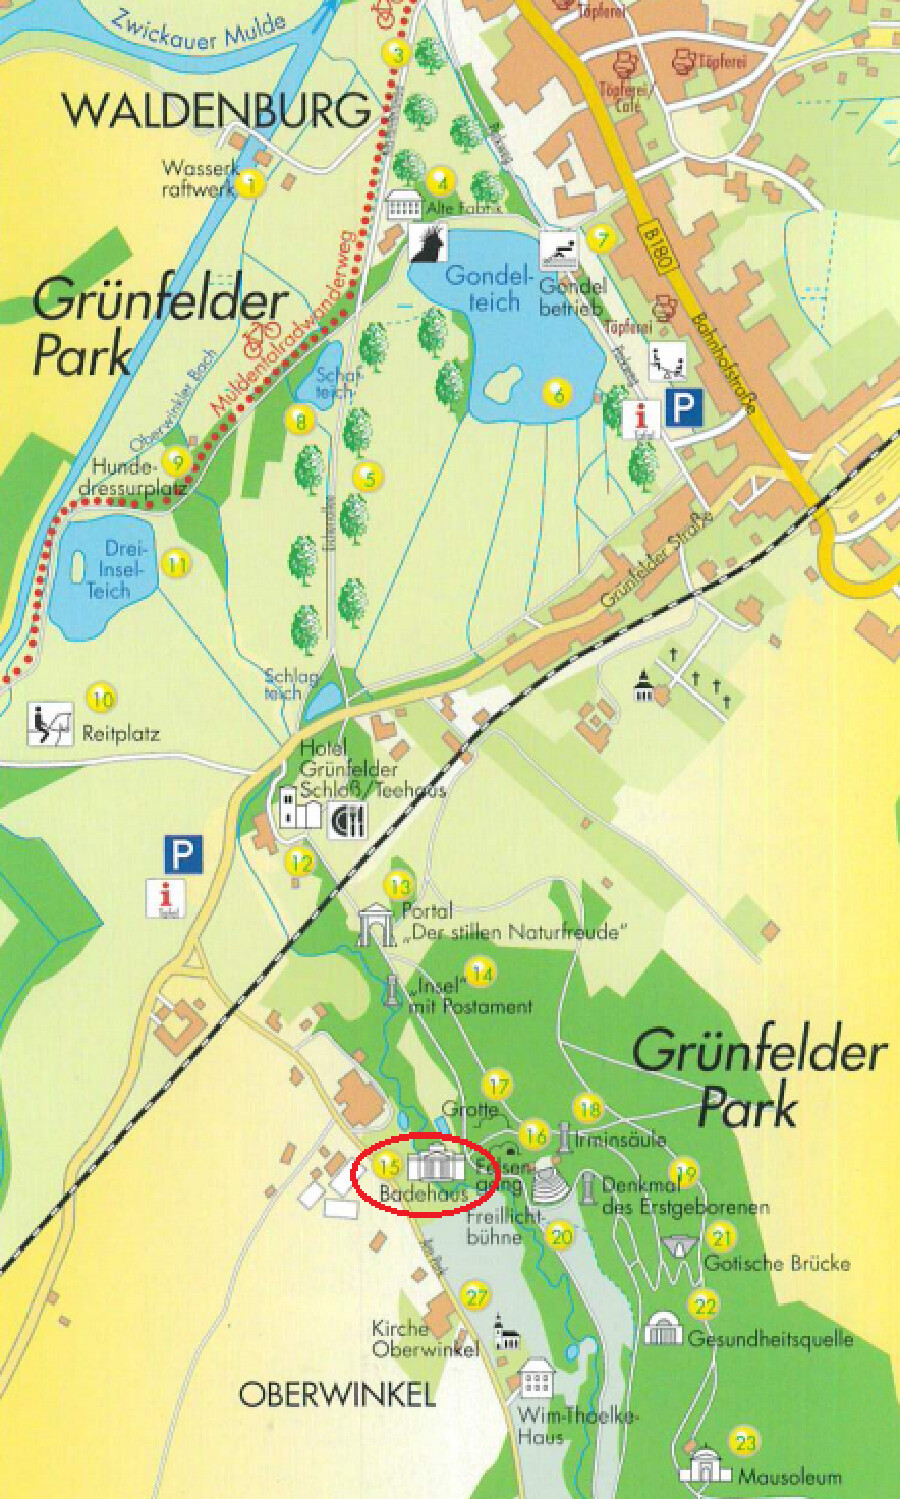 Plan Grünfelder Park / Trauung